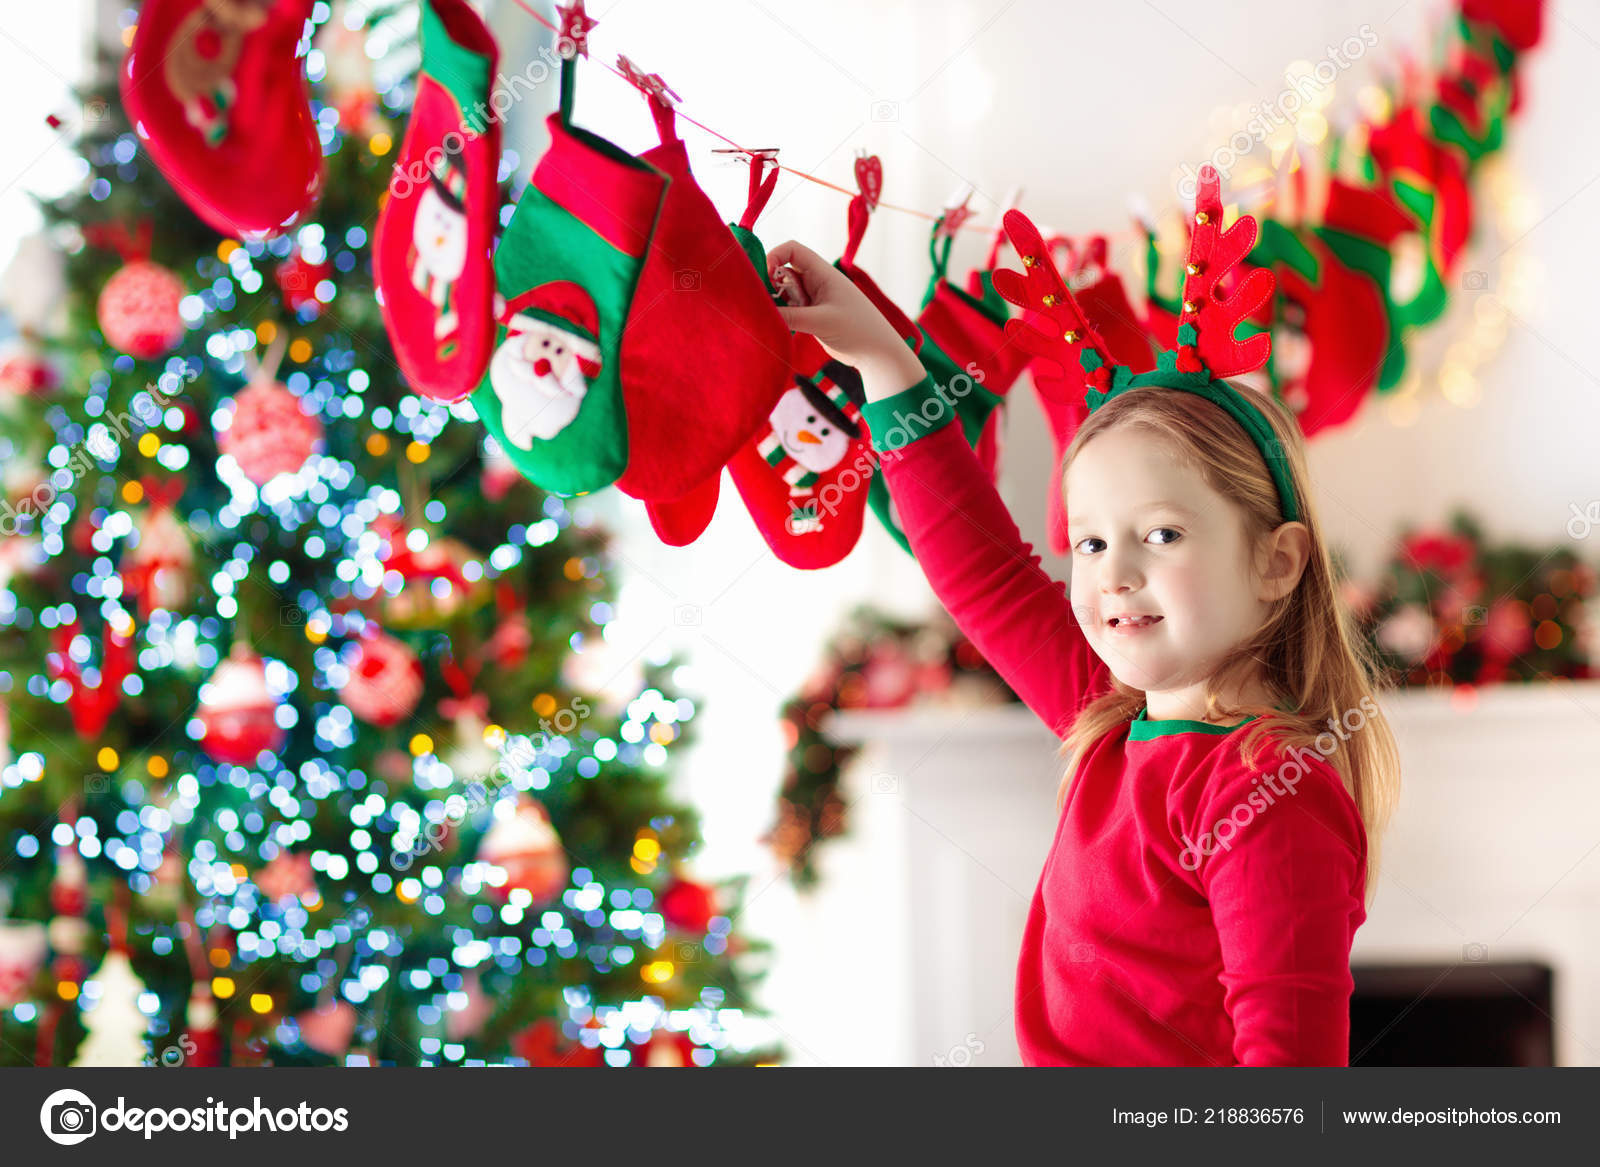   1 Décembre.Bientôt noël . - Page 2 Depositphotos_218836576-stock-photo-kids-opening-christmas-presents-child